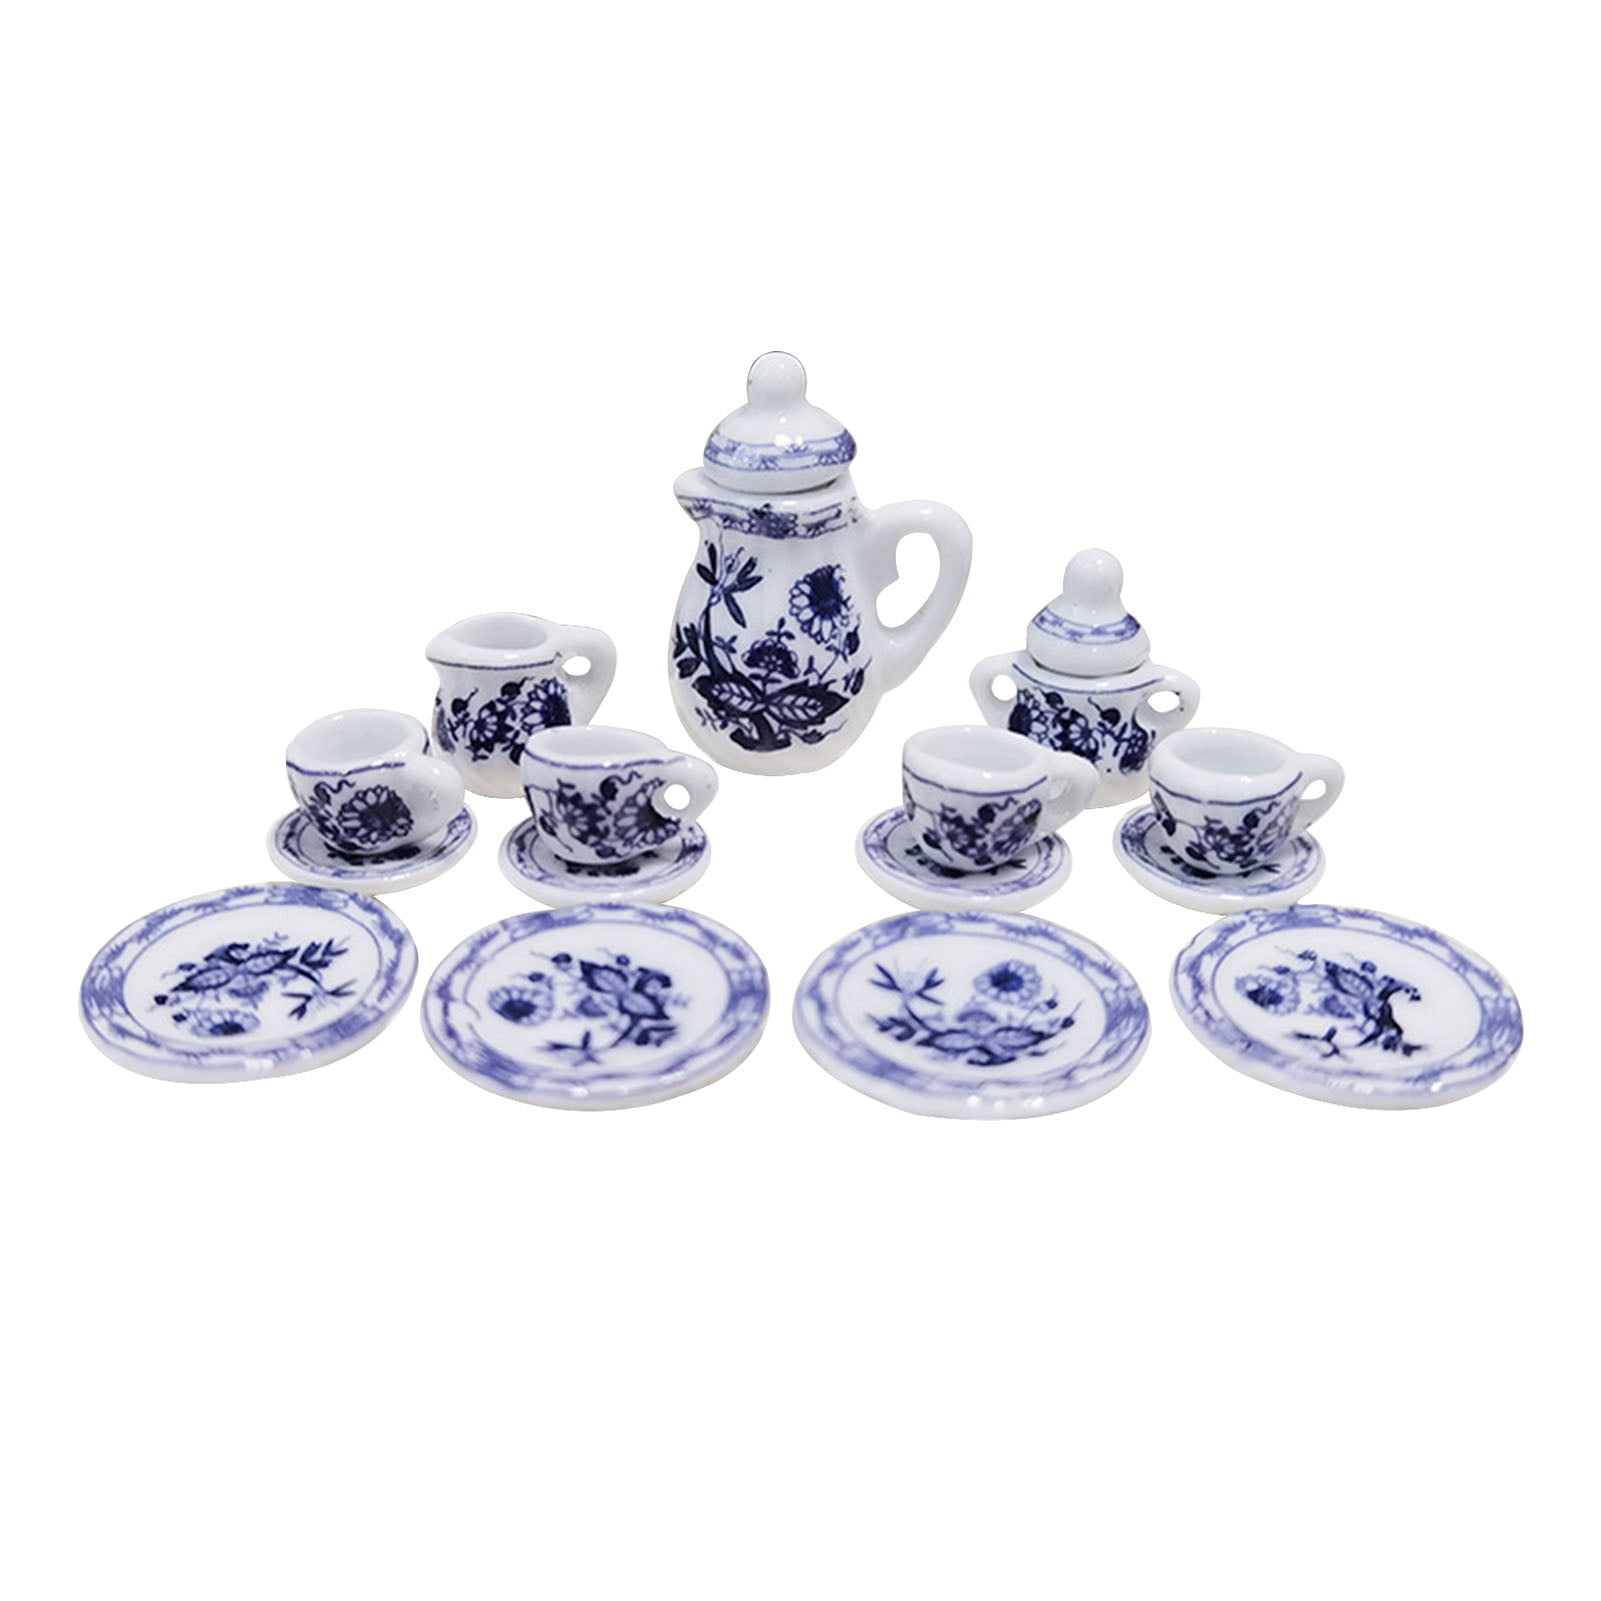 15pcs Dollhouse Miniature Dining Ware British Style Porcelain Tea Set Blue 